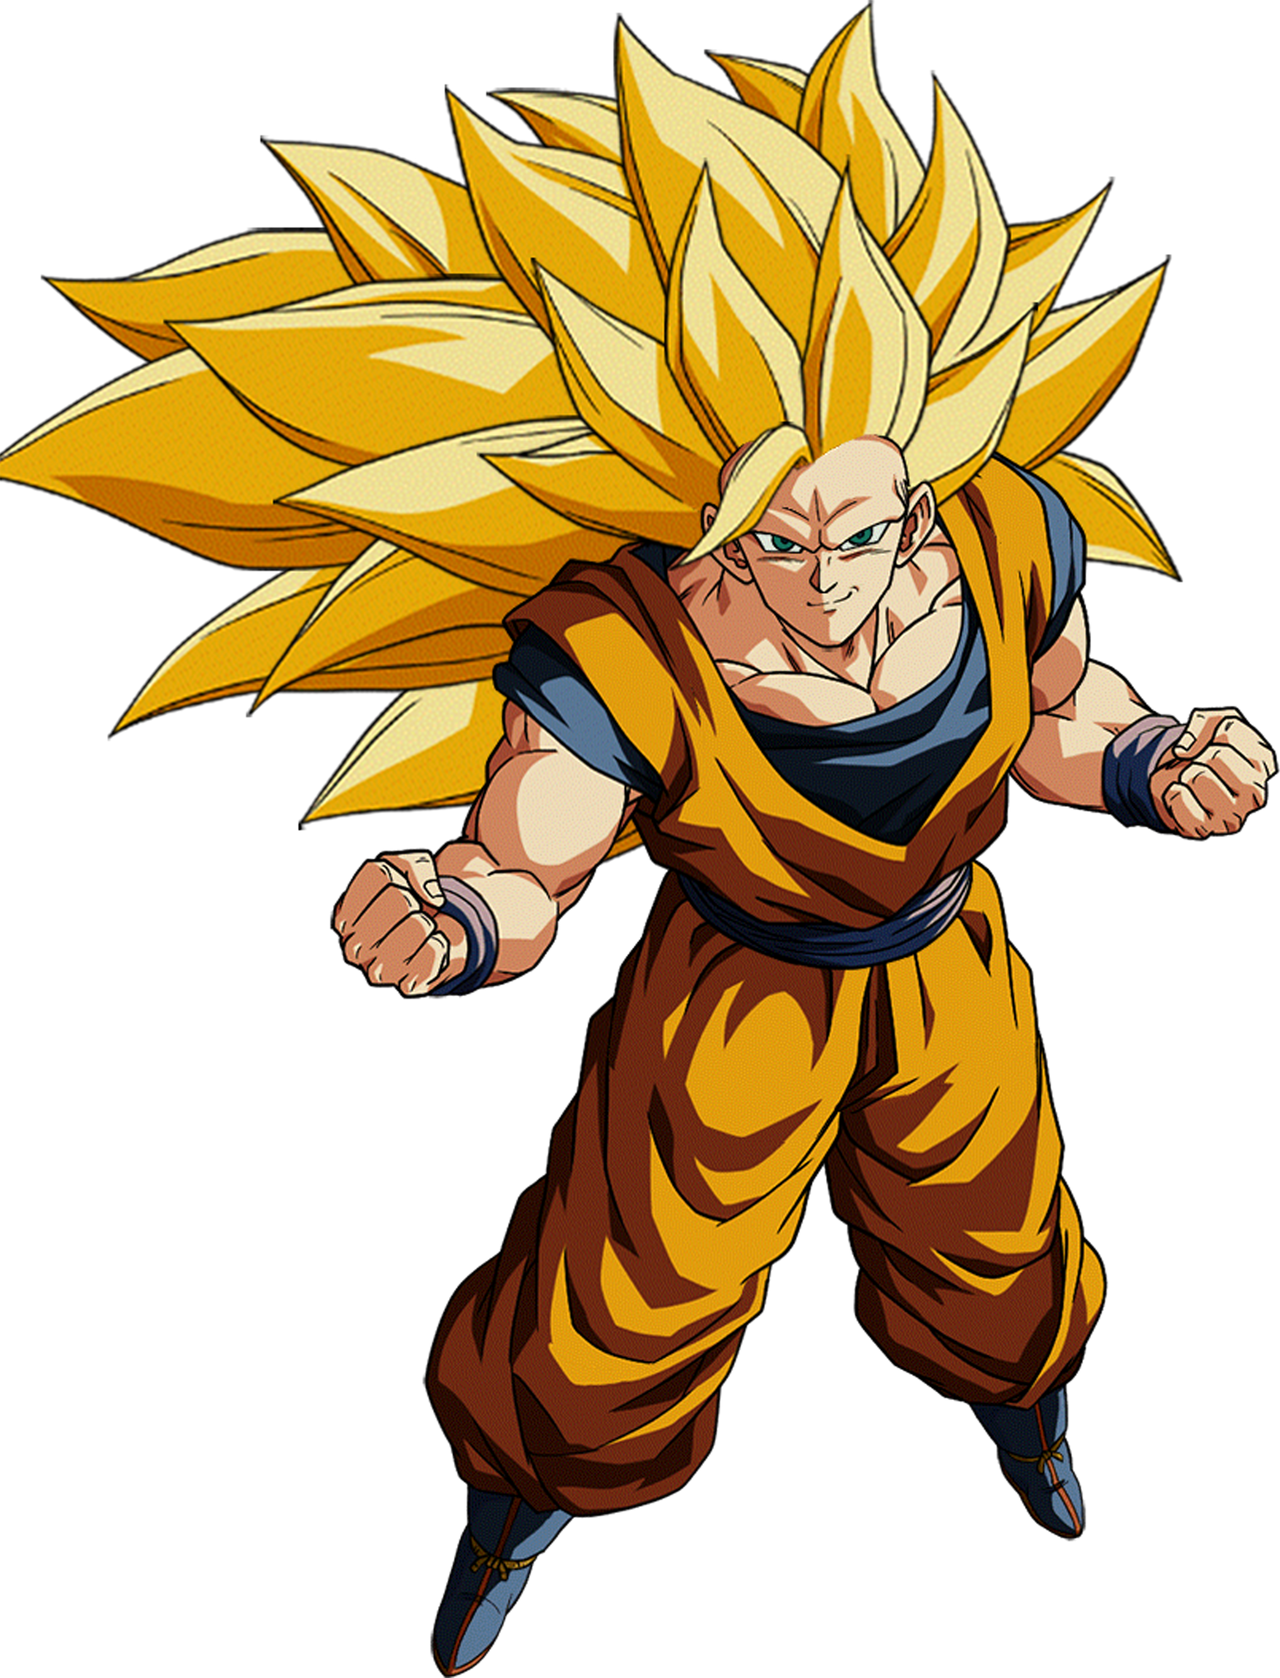 Super Saiyan 3 Goku 1 by T3rm4t0r on DeviantArt